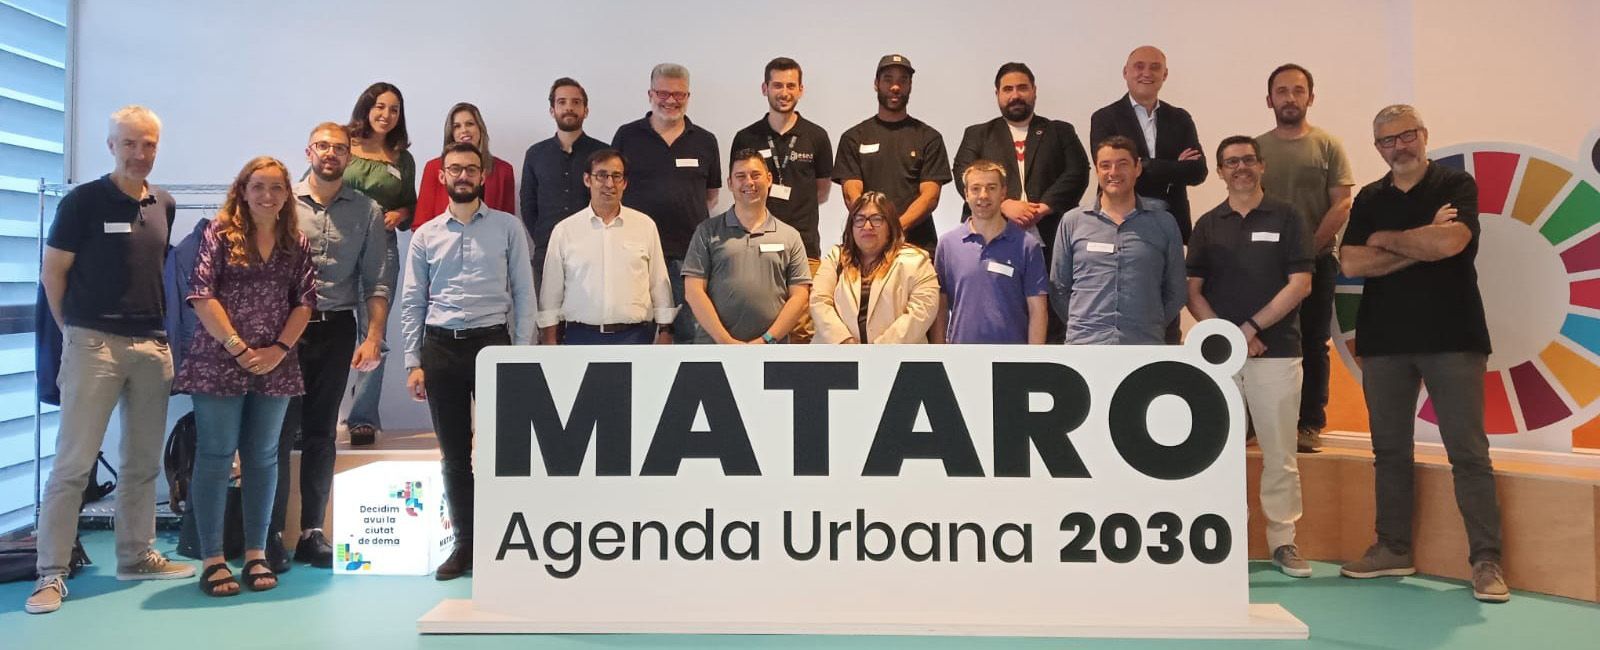 Mataró agenda urbana 2030